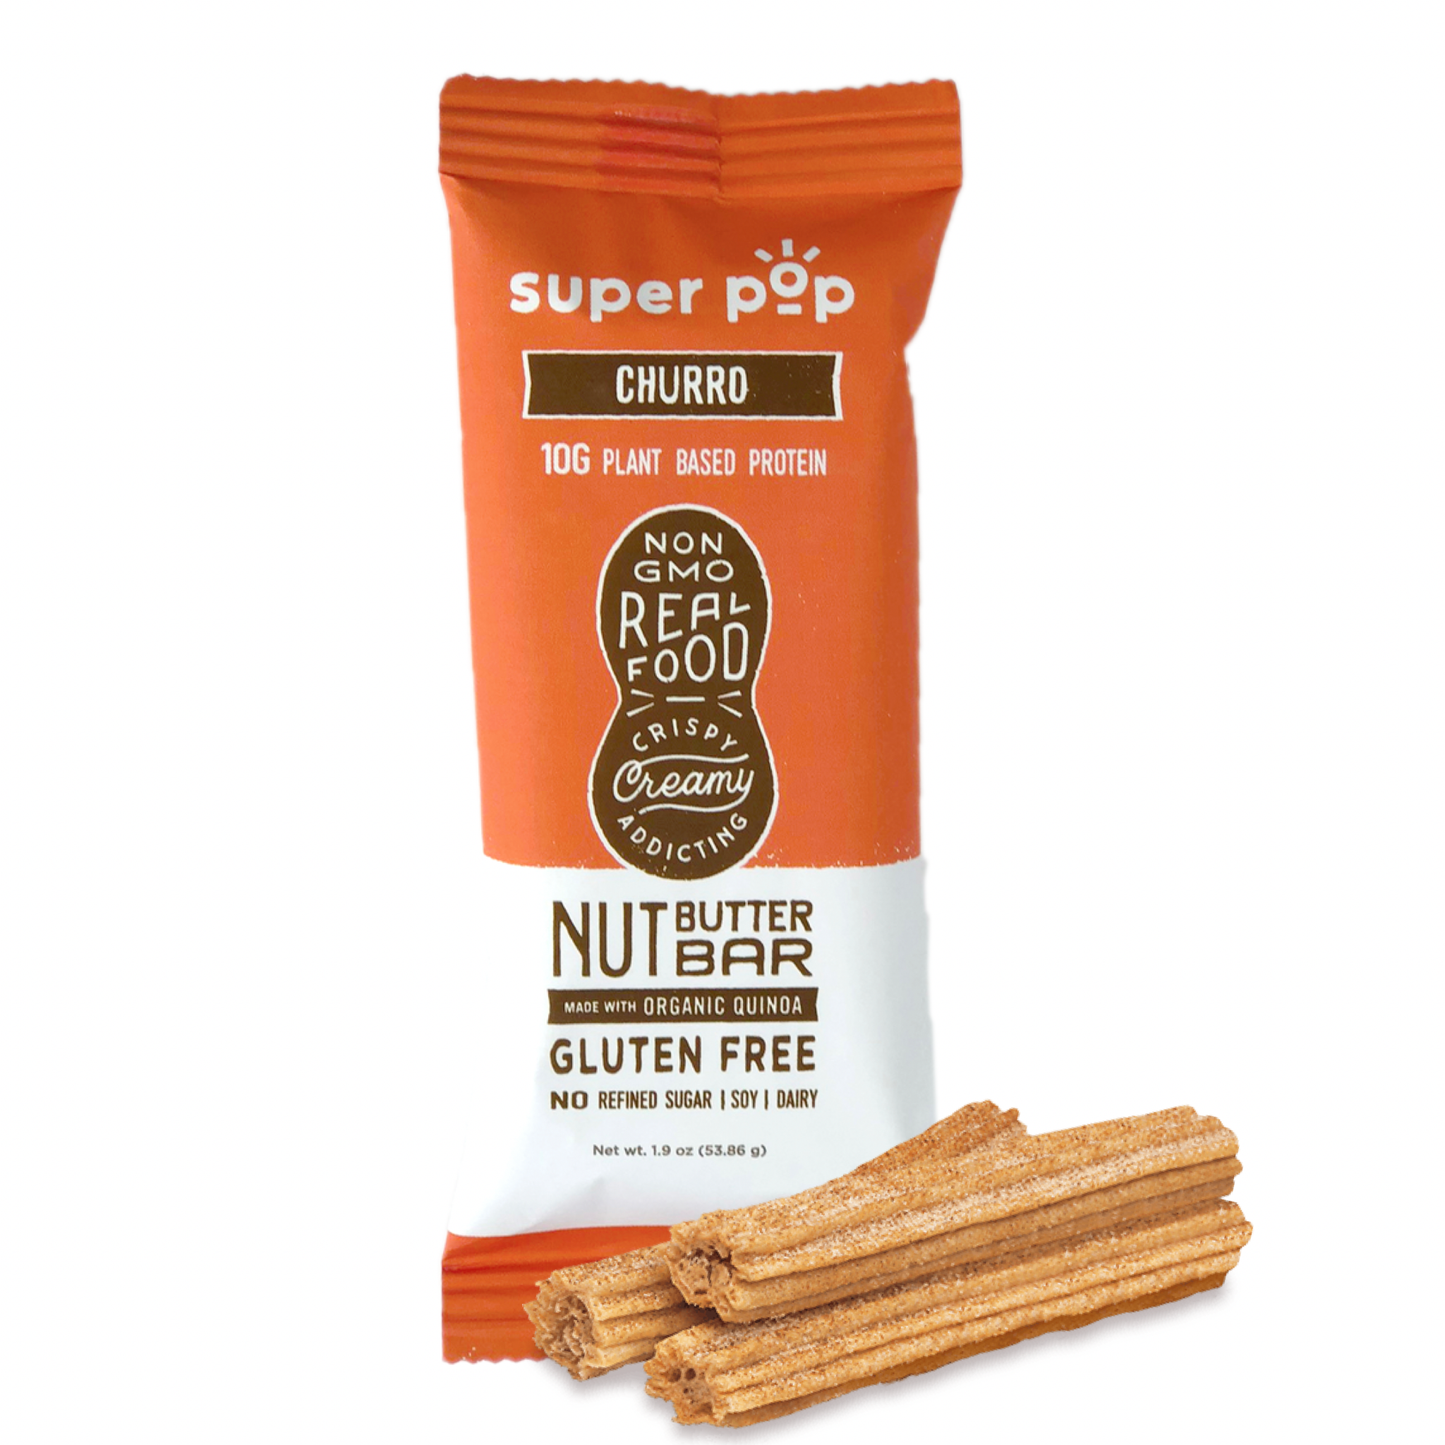 Peanut Butter Churro - 12 Pack